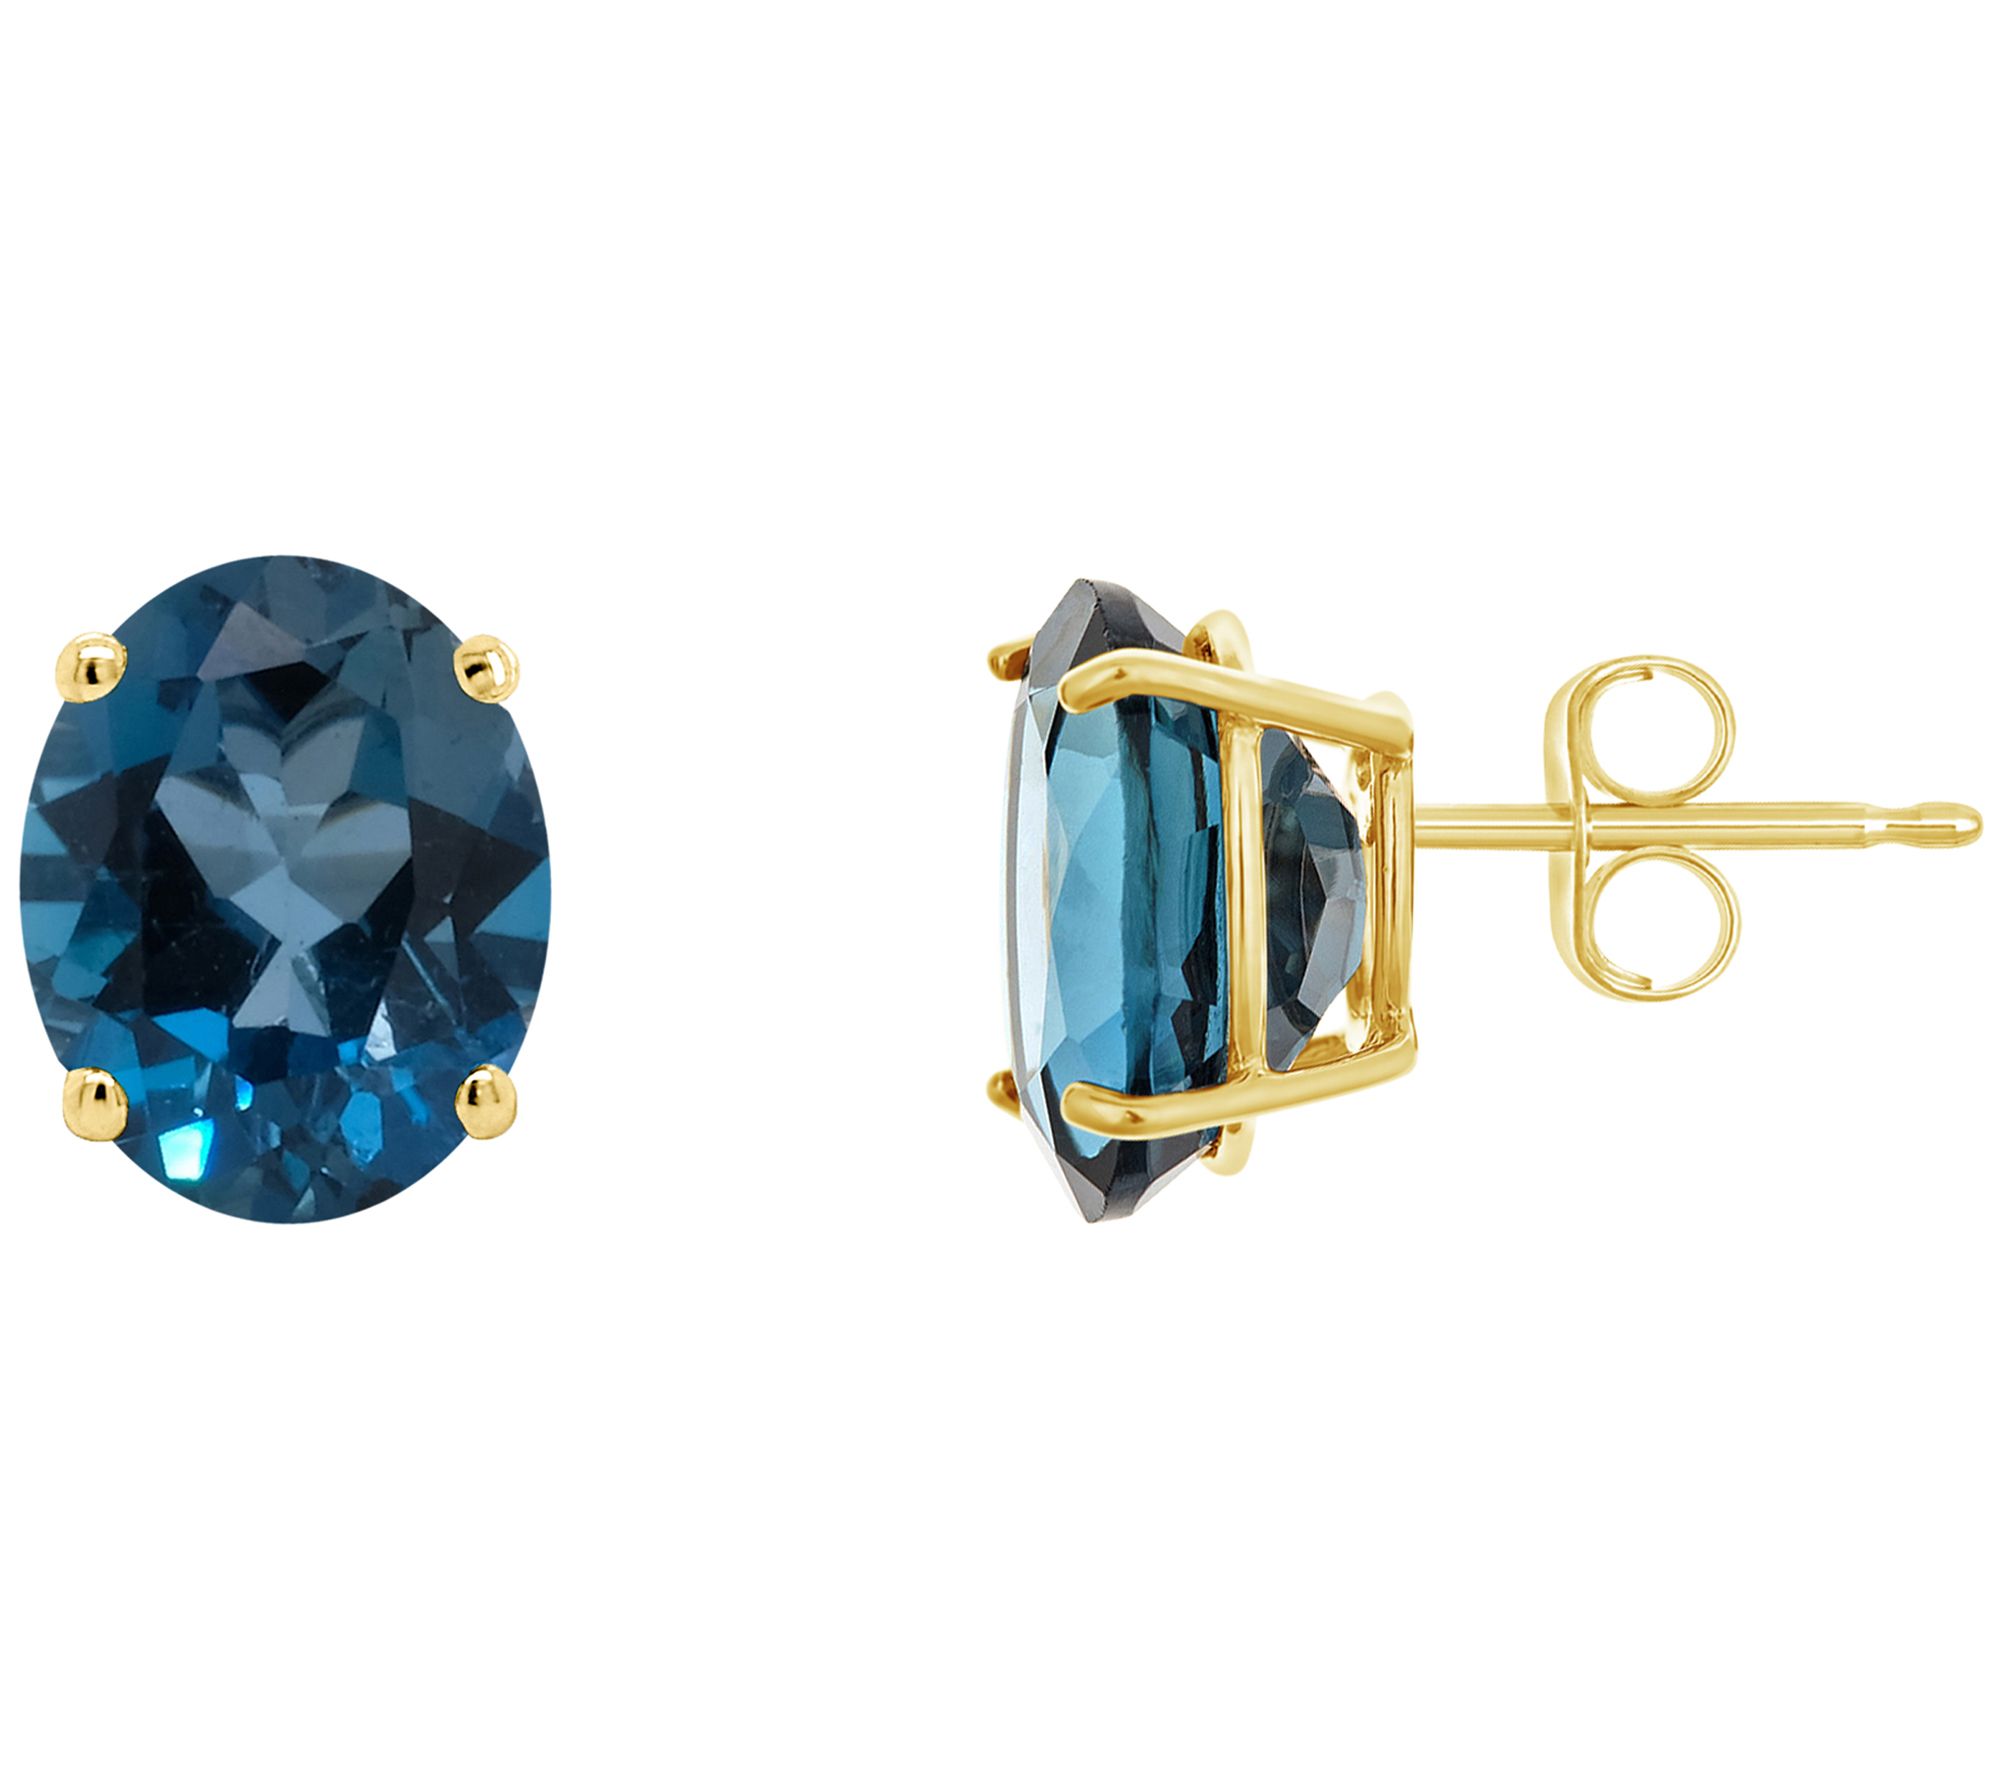 Blue Topaz Stud Earrings 9 Carat Yellow Gold Heart Design Studs Natural Stones 